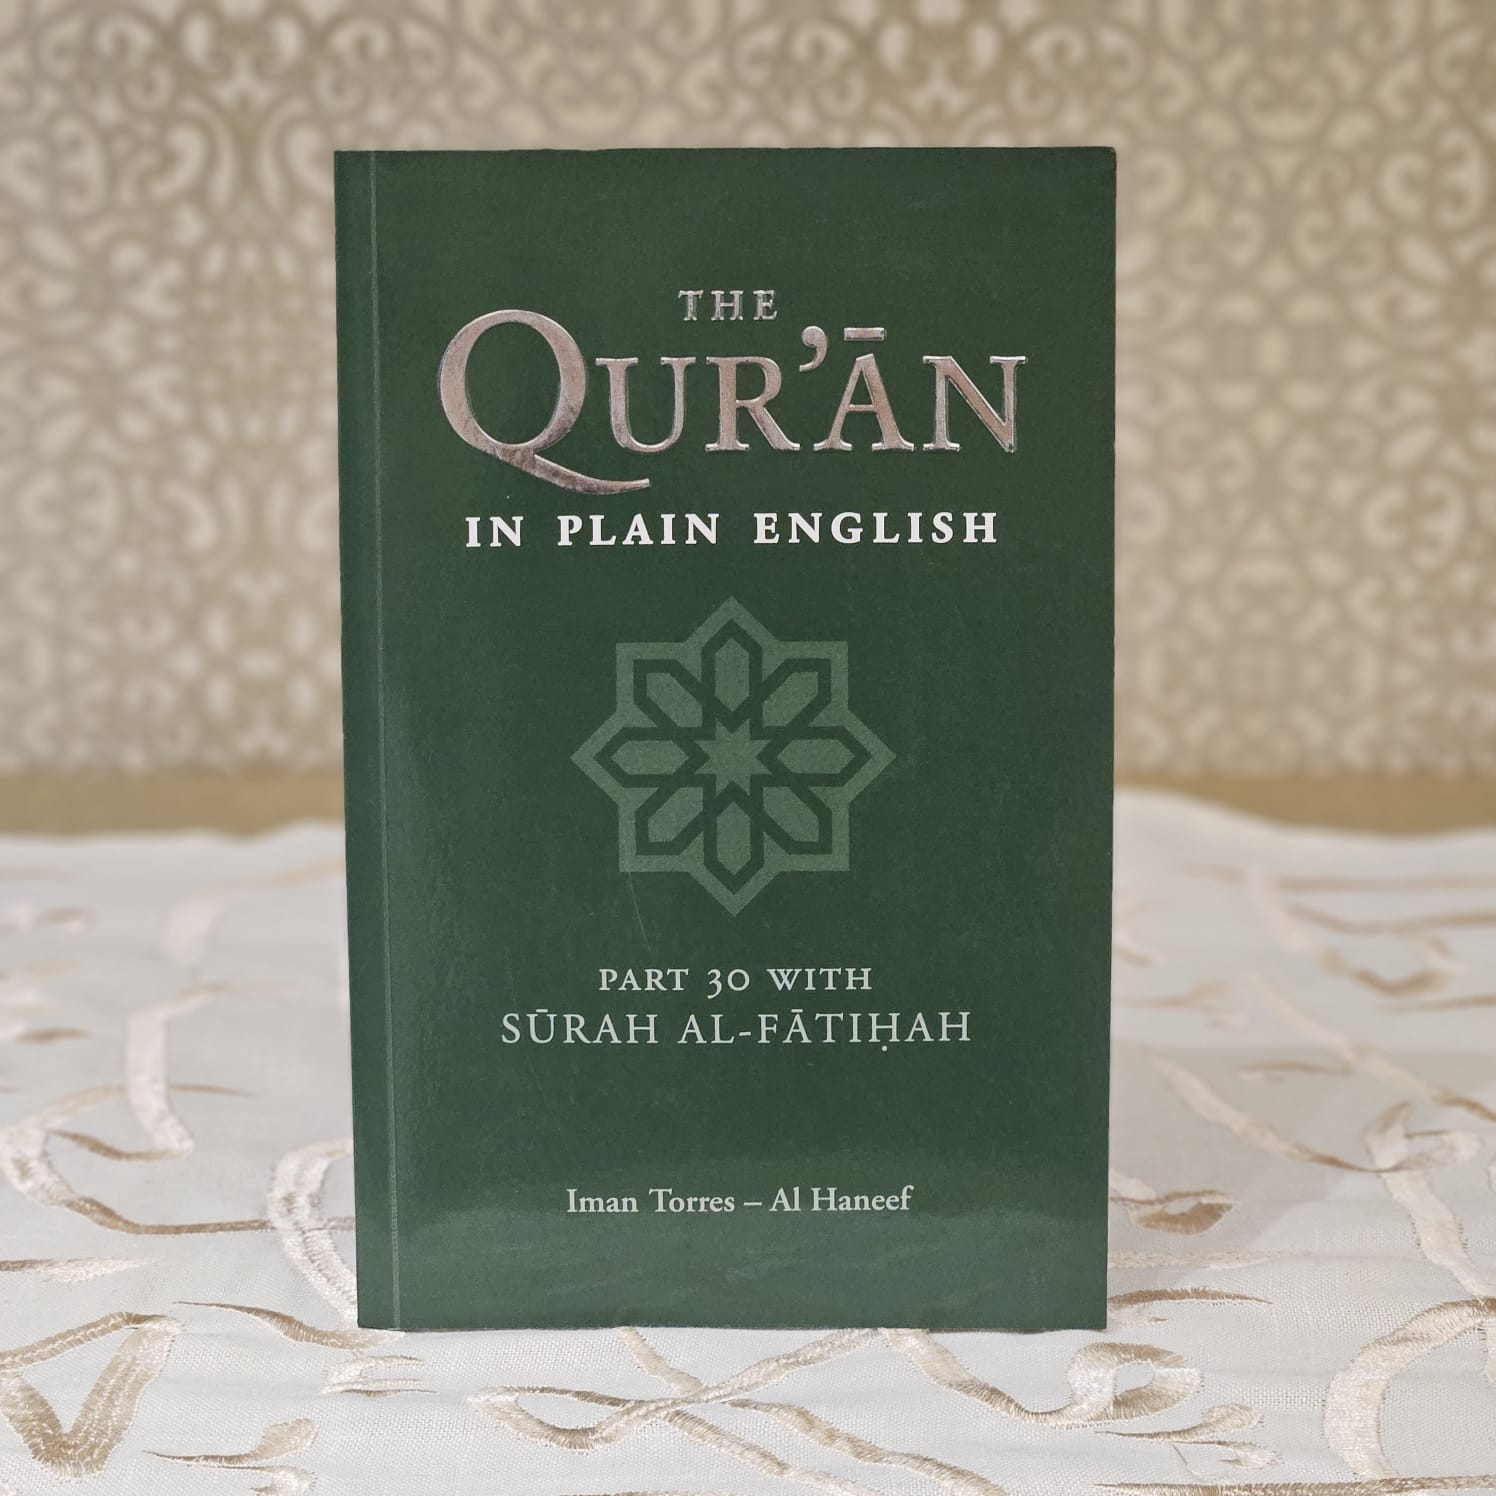 I-Qur'an in Plain English - Ingxenye 30